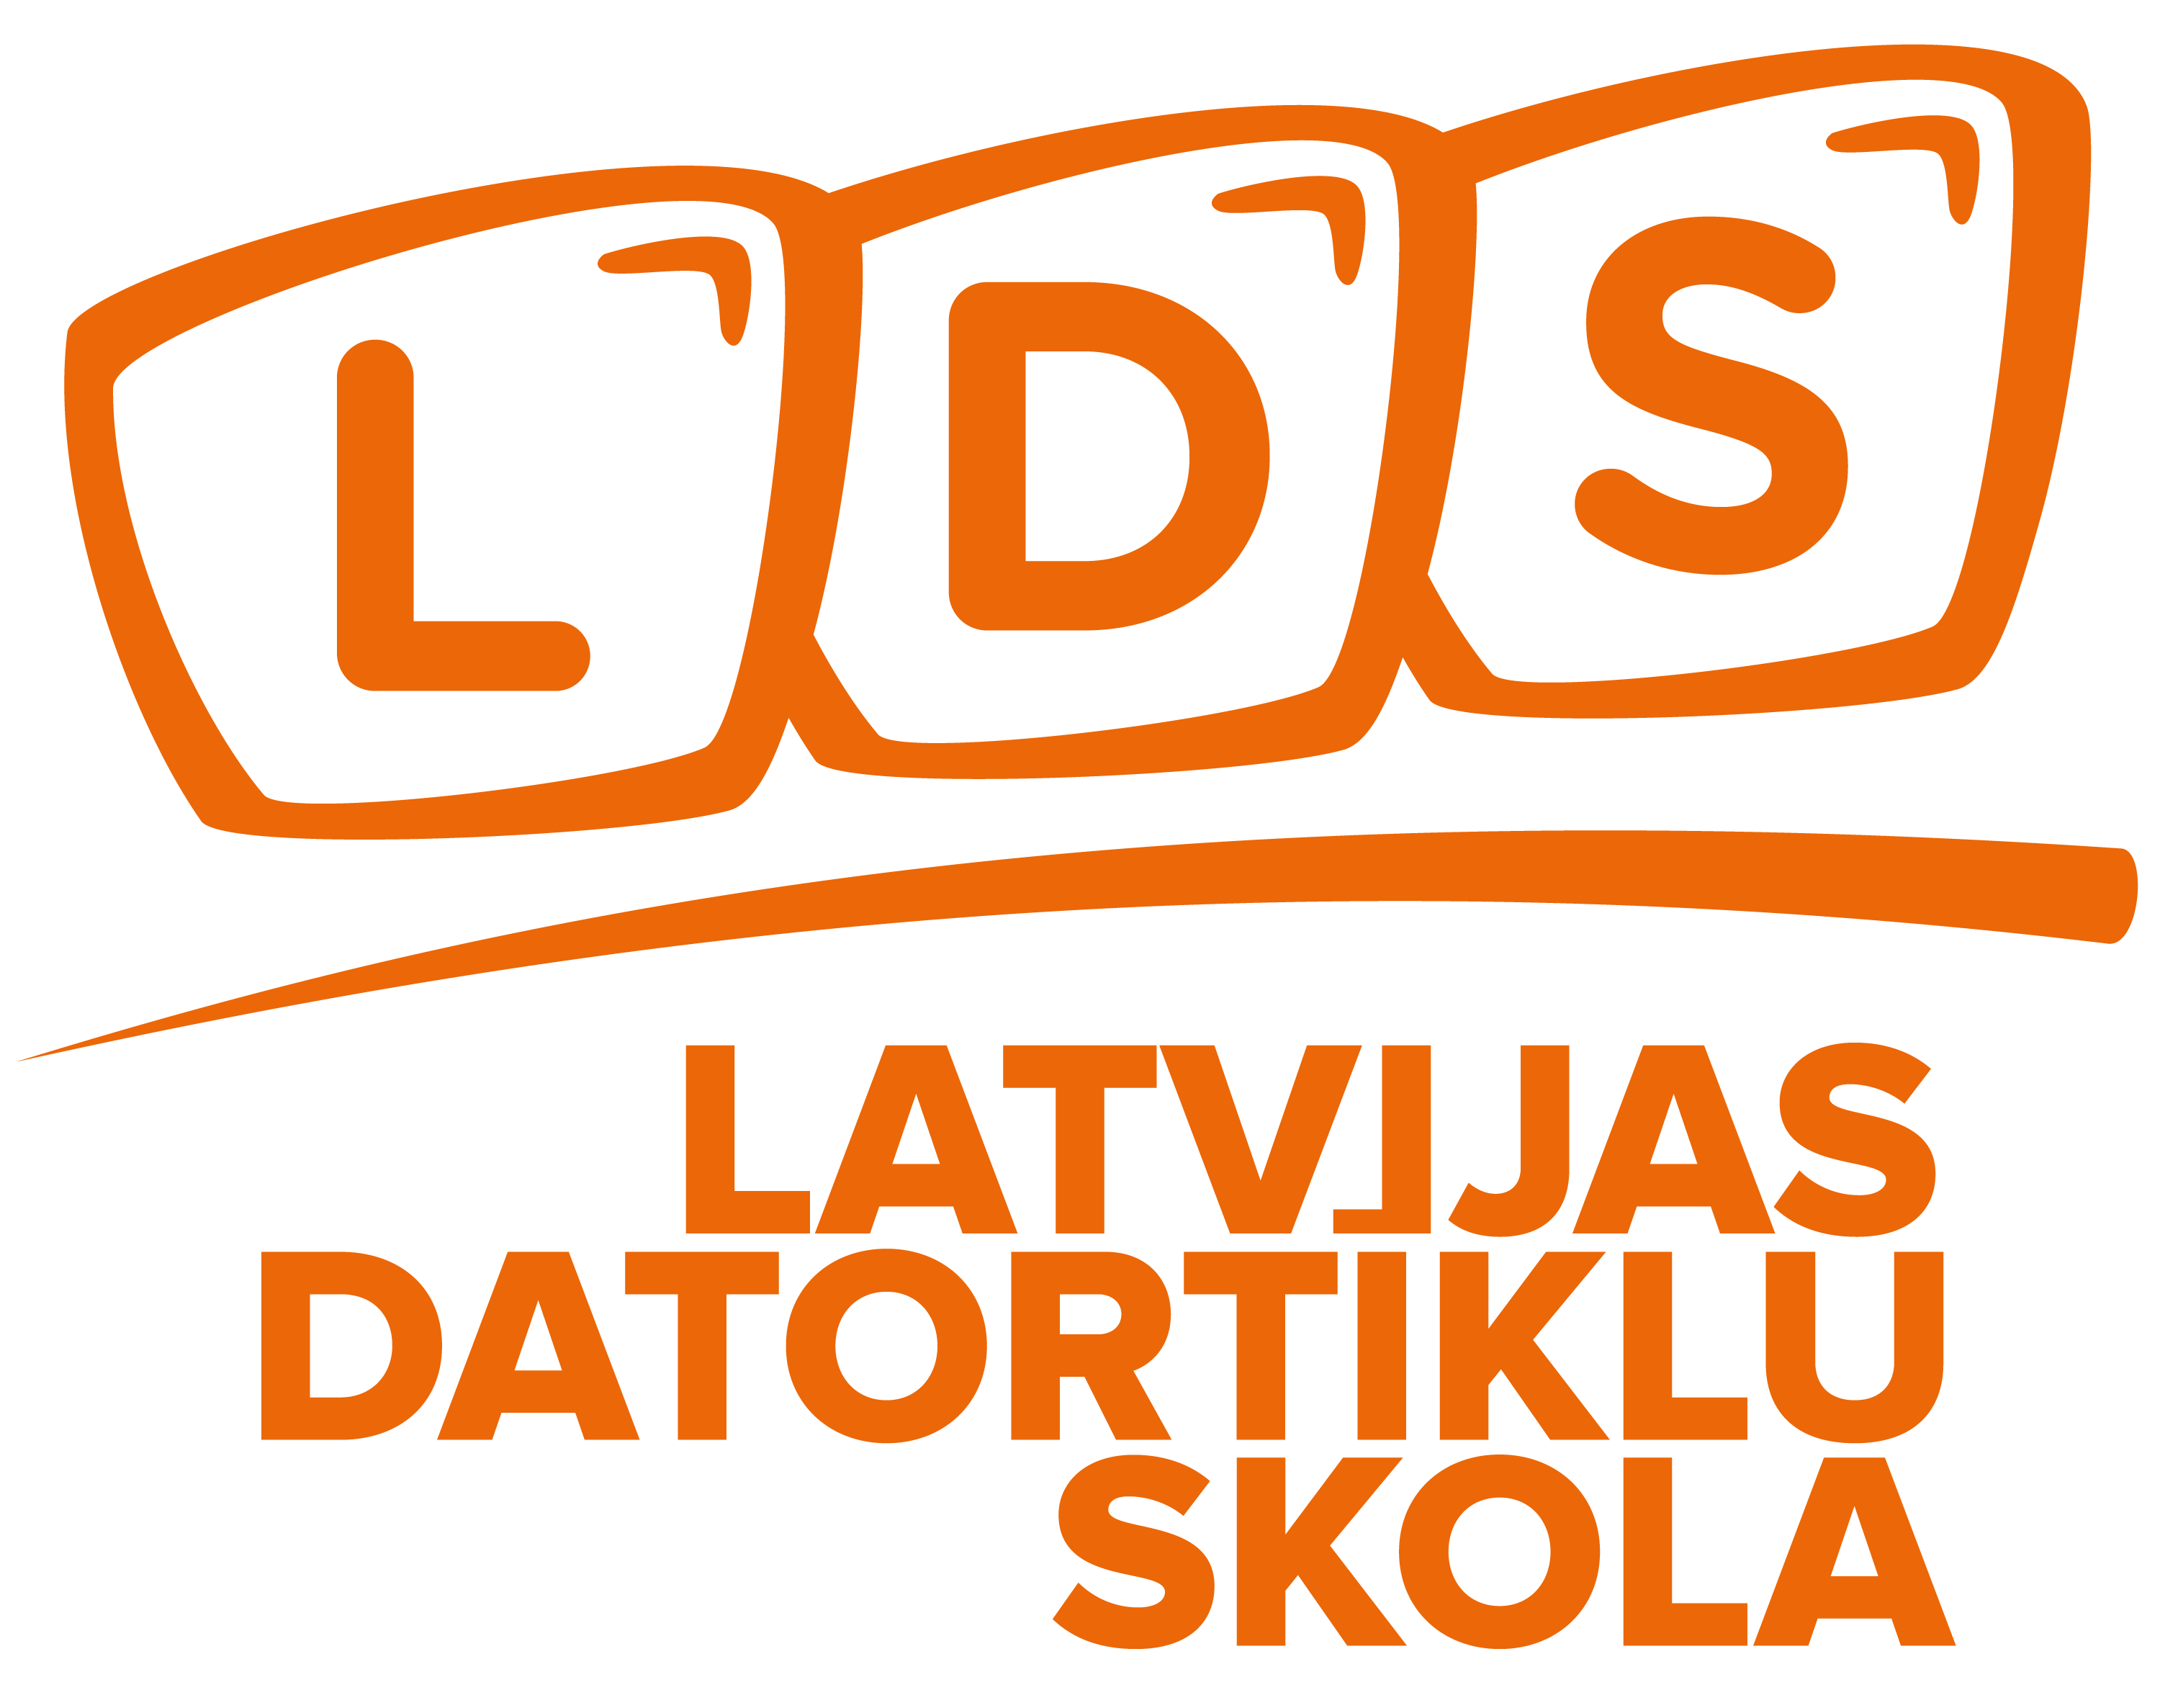 LDS logo